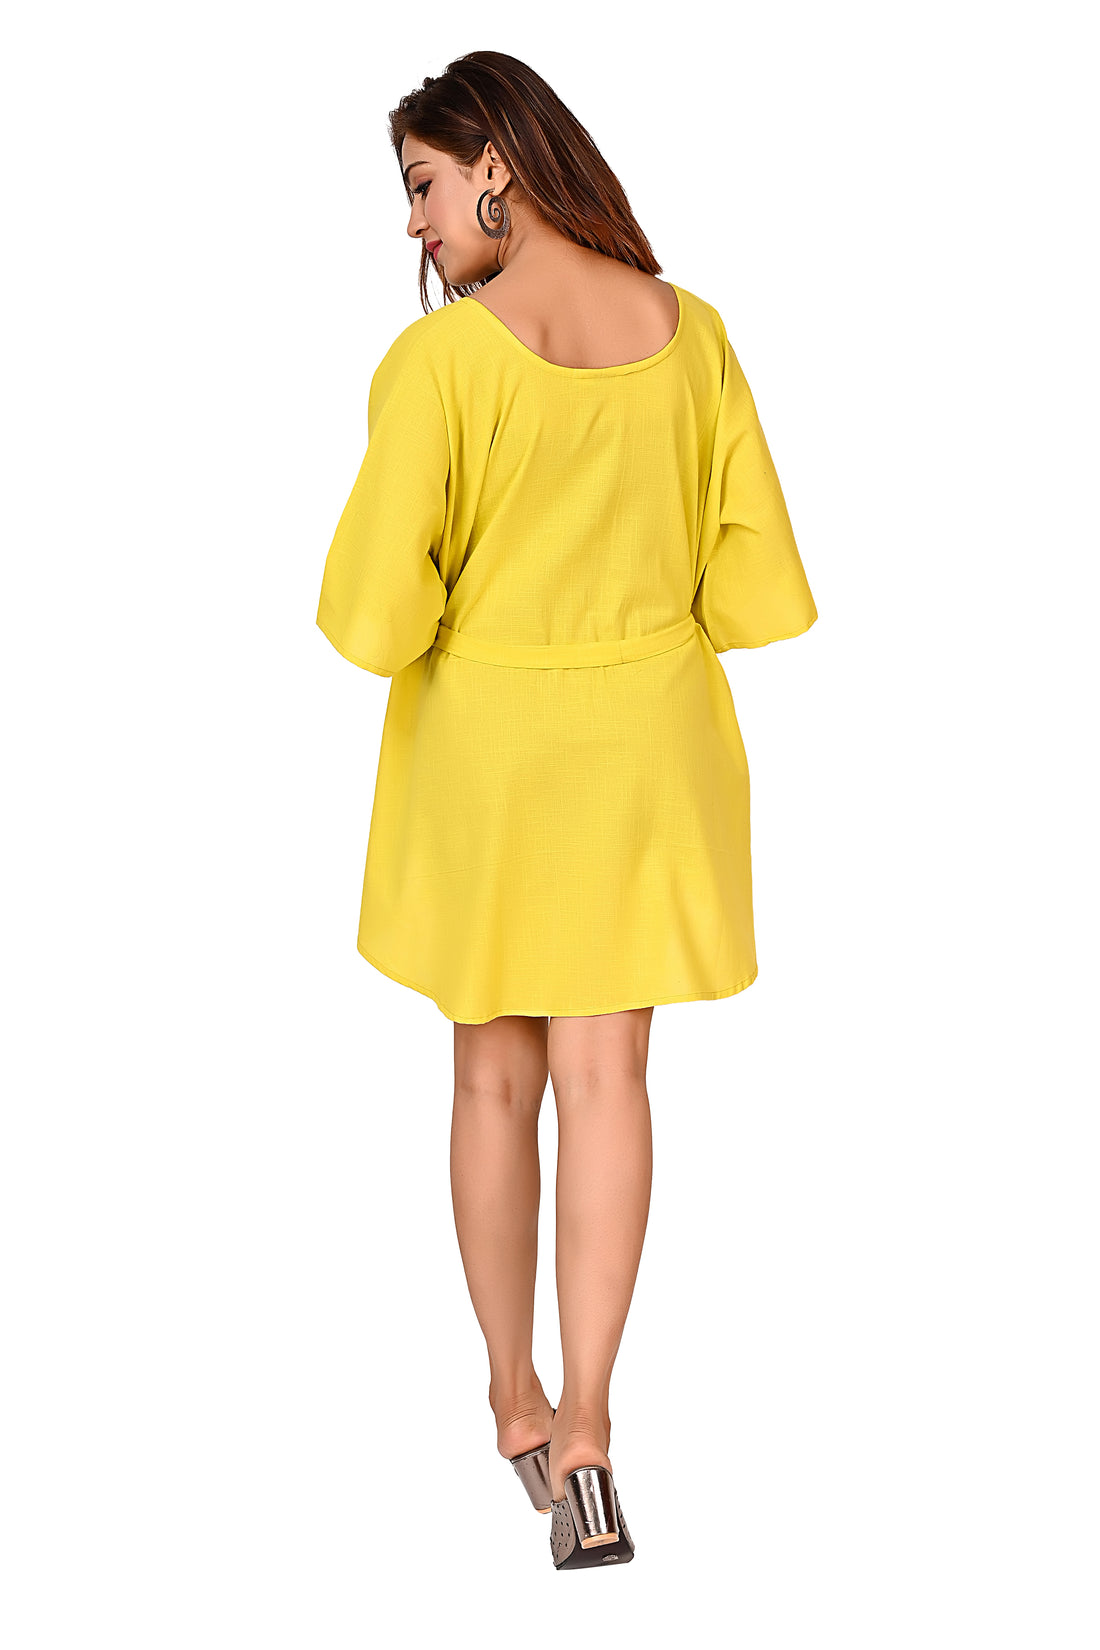 Nirmal online Premium Cotton Top for Women in Yellow Colour